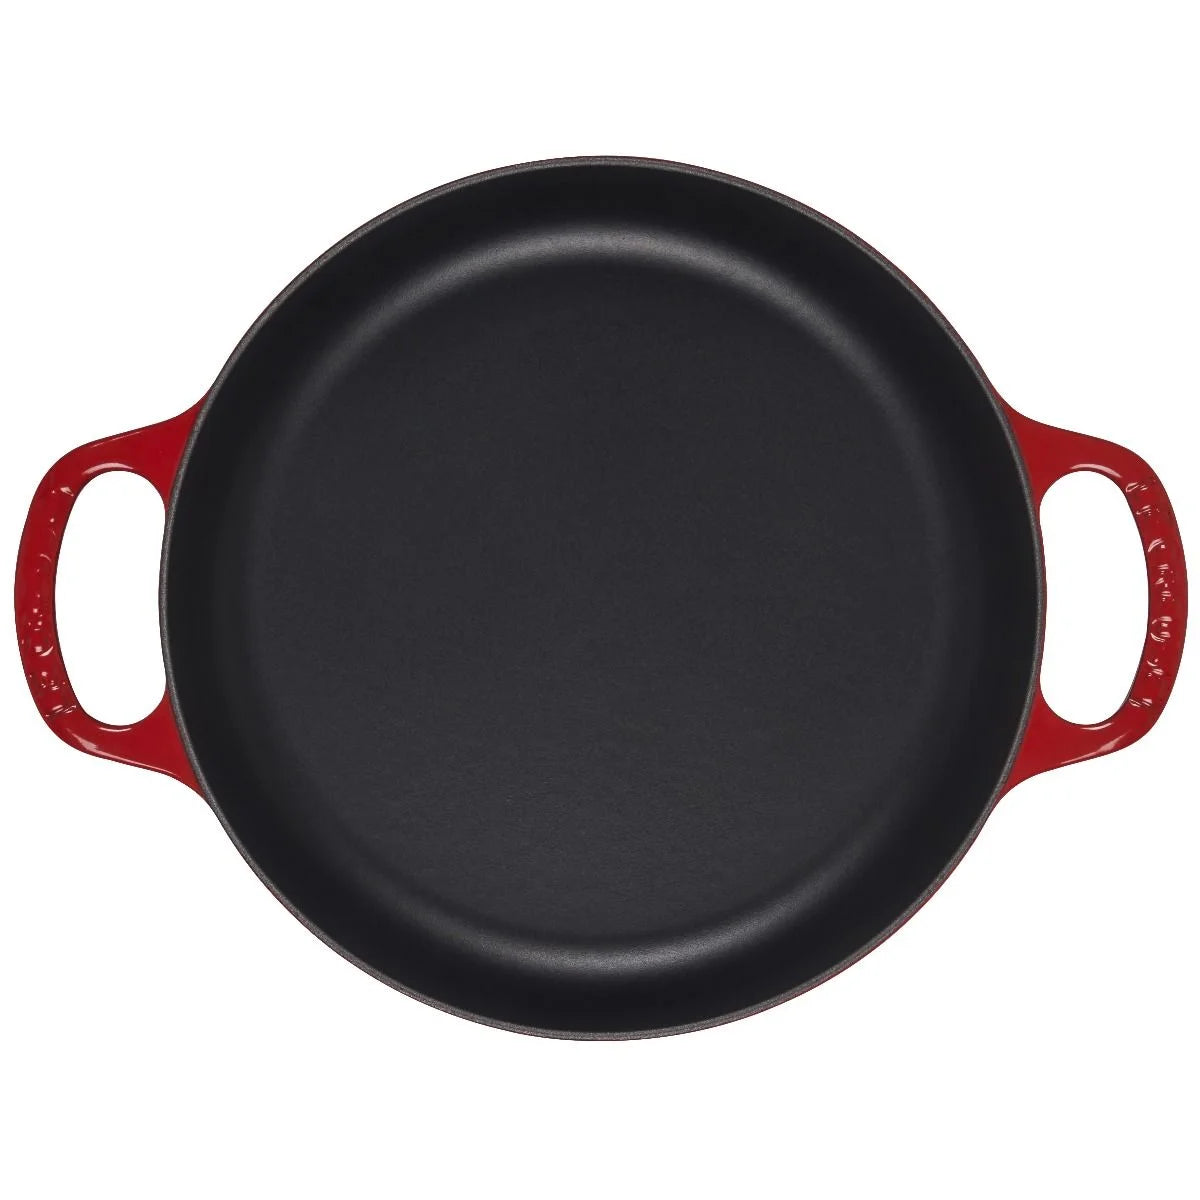 Le Creuset Signature Enameled Cast Iron Everyday Pan, 11-Inches, Cerise - Kitchen Universe